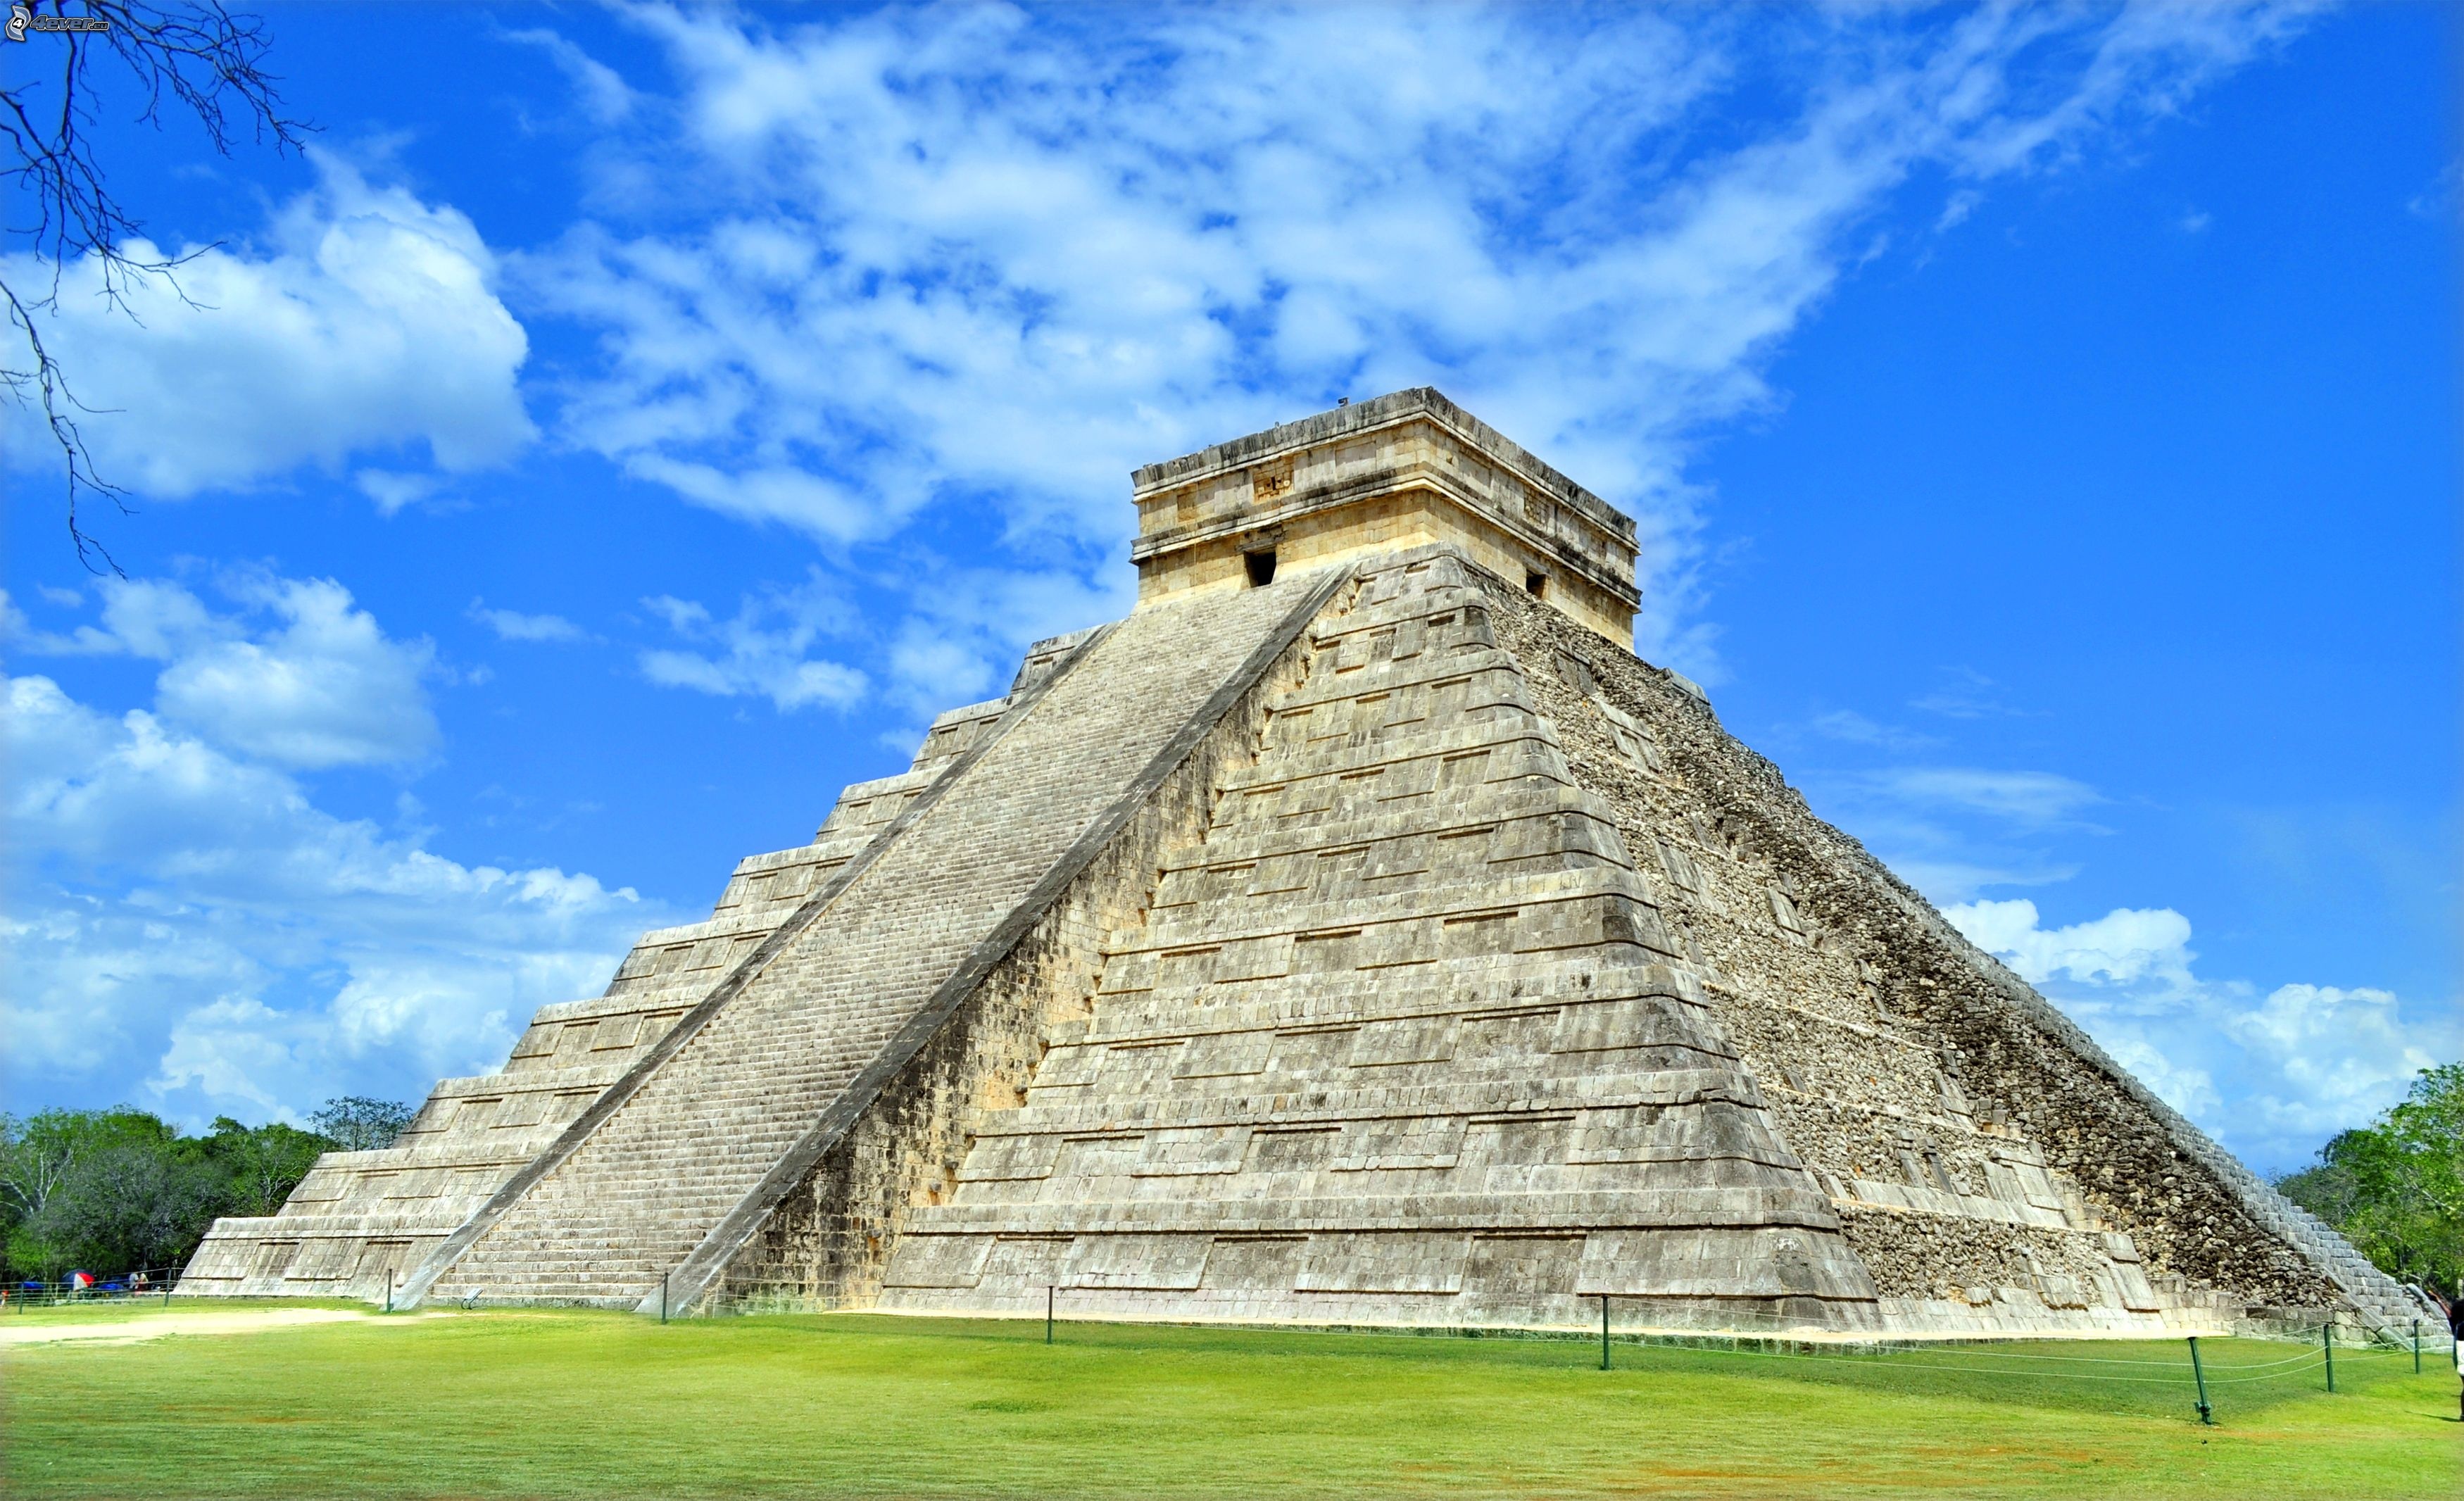 Ancient wonder, Architectural marvel, Mayan masterpiece, Mexico's treasure, 3500x2140 HD Desktop